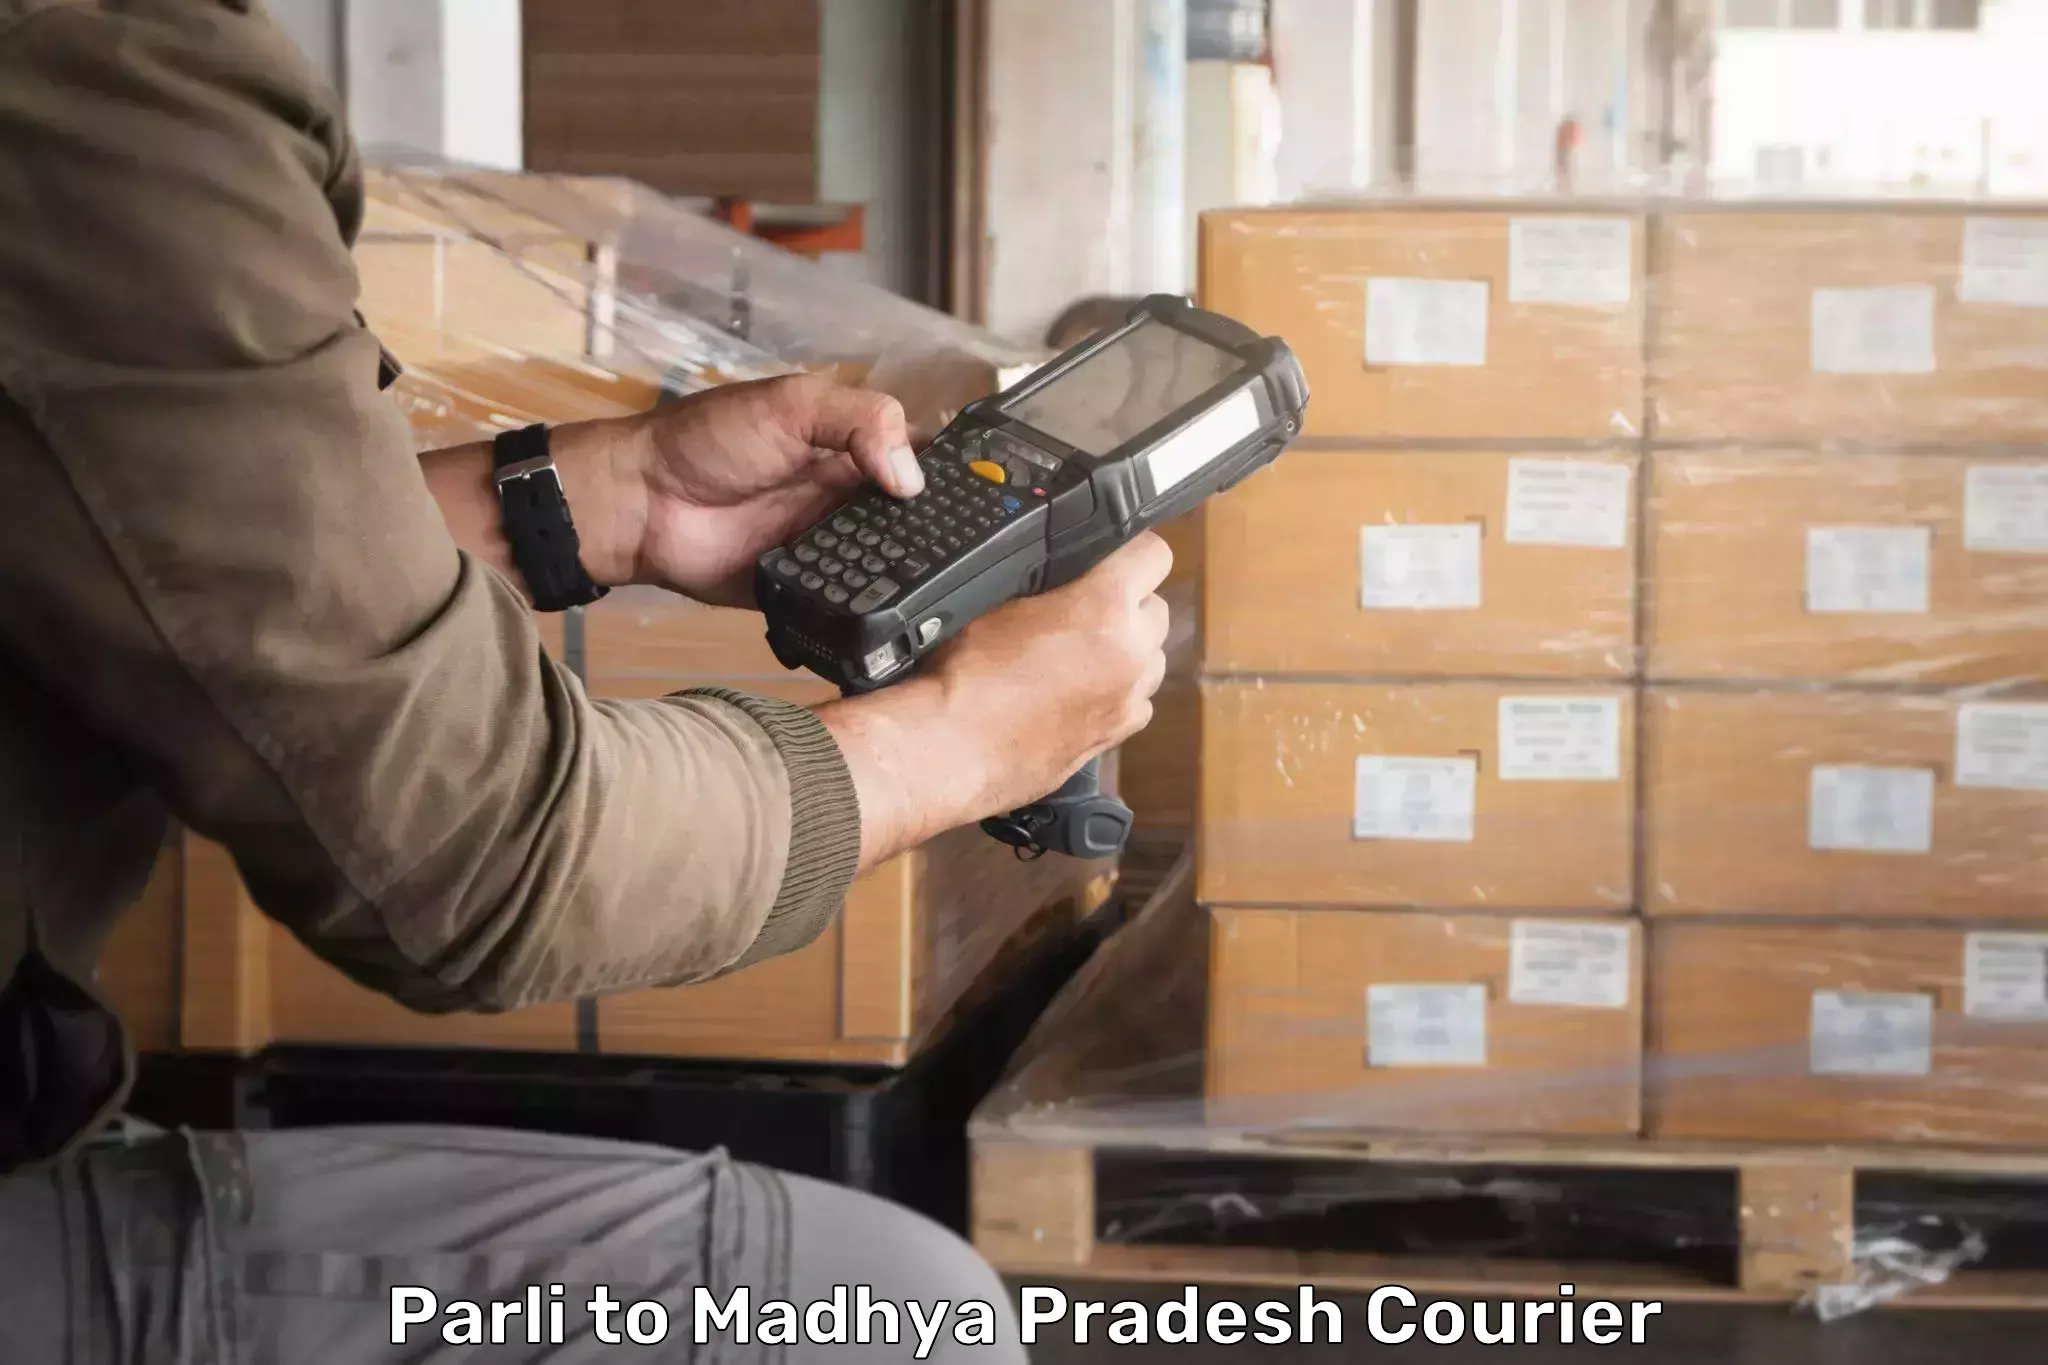 Personalized courier experiences Parli to Madhya Pradesh